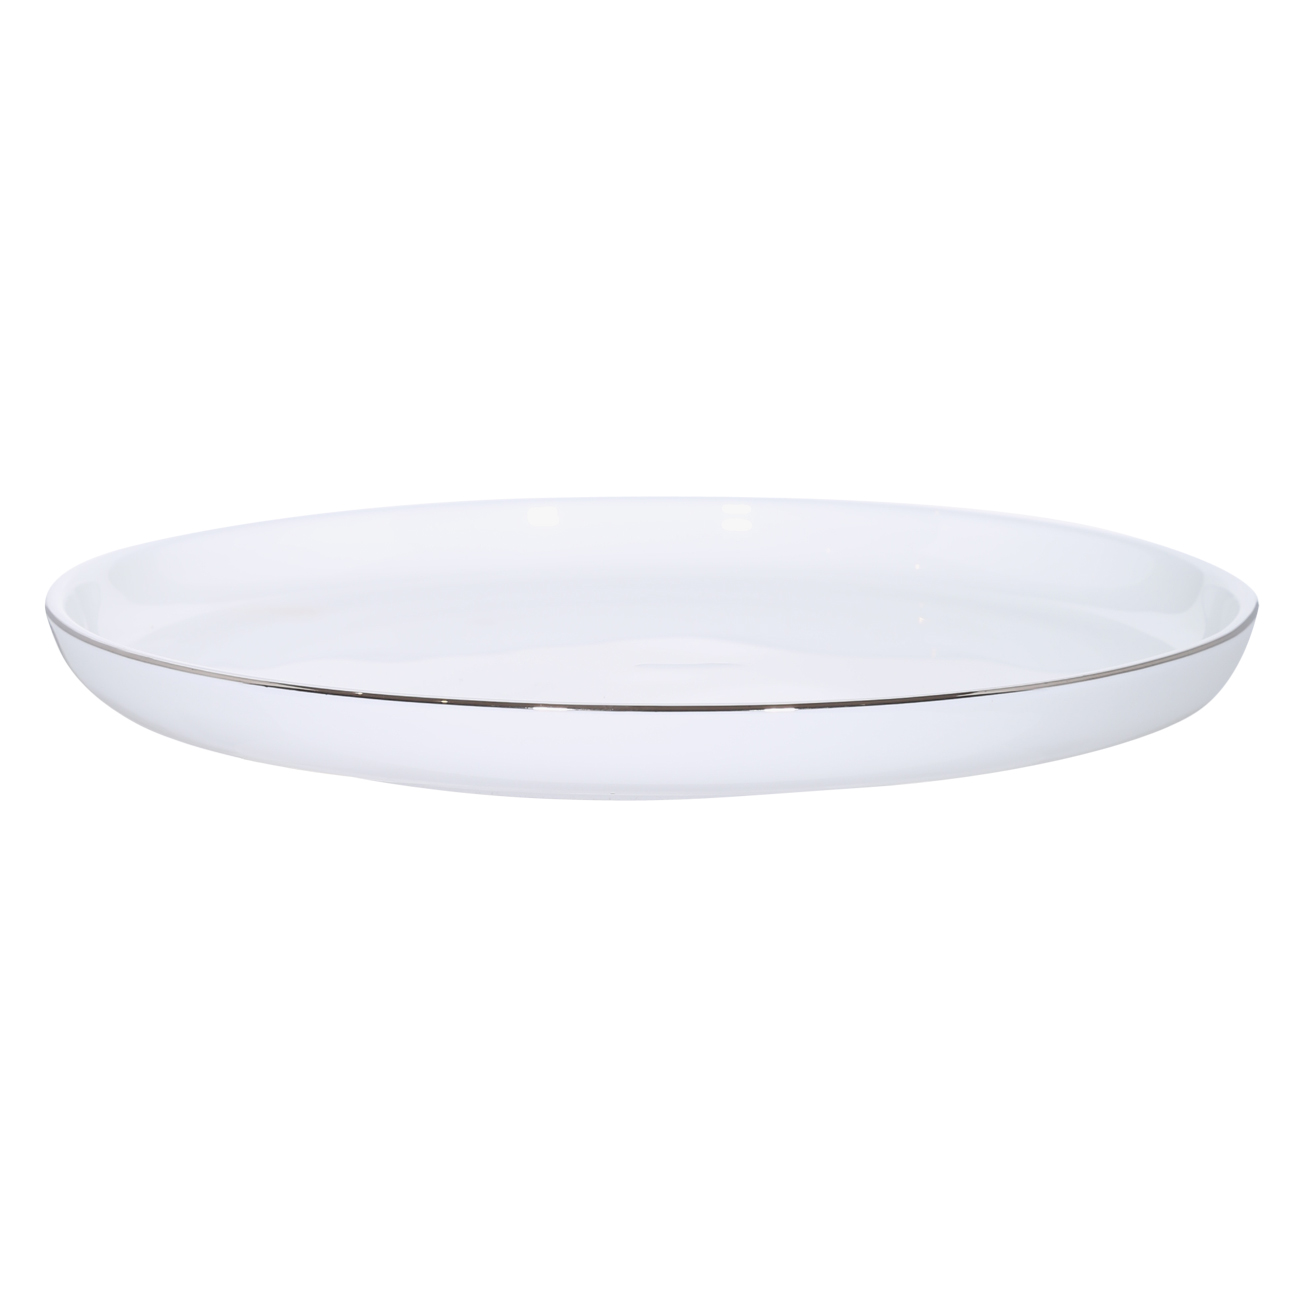 Dining set, 6 pers, 18 pr, porcelain F, white, Ideal silver изображение № 4